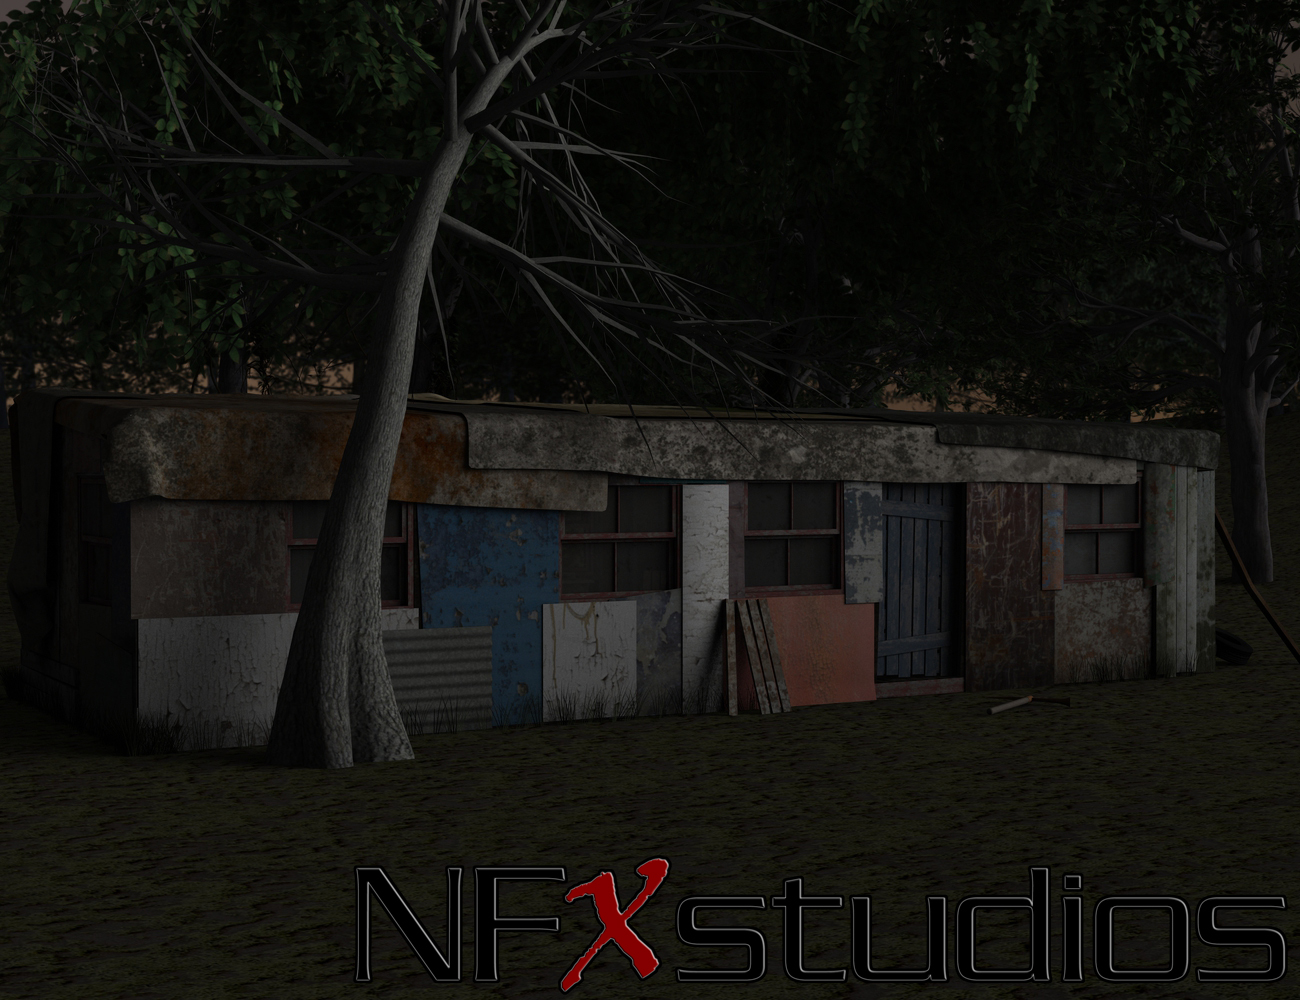 NFXstudios Summer Camp by: Collective3d, 3D Models by Daz 3D